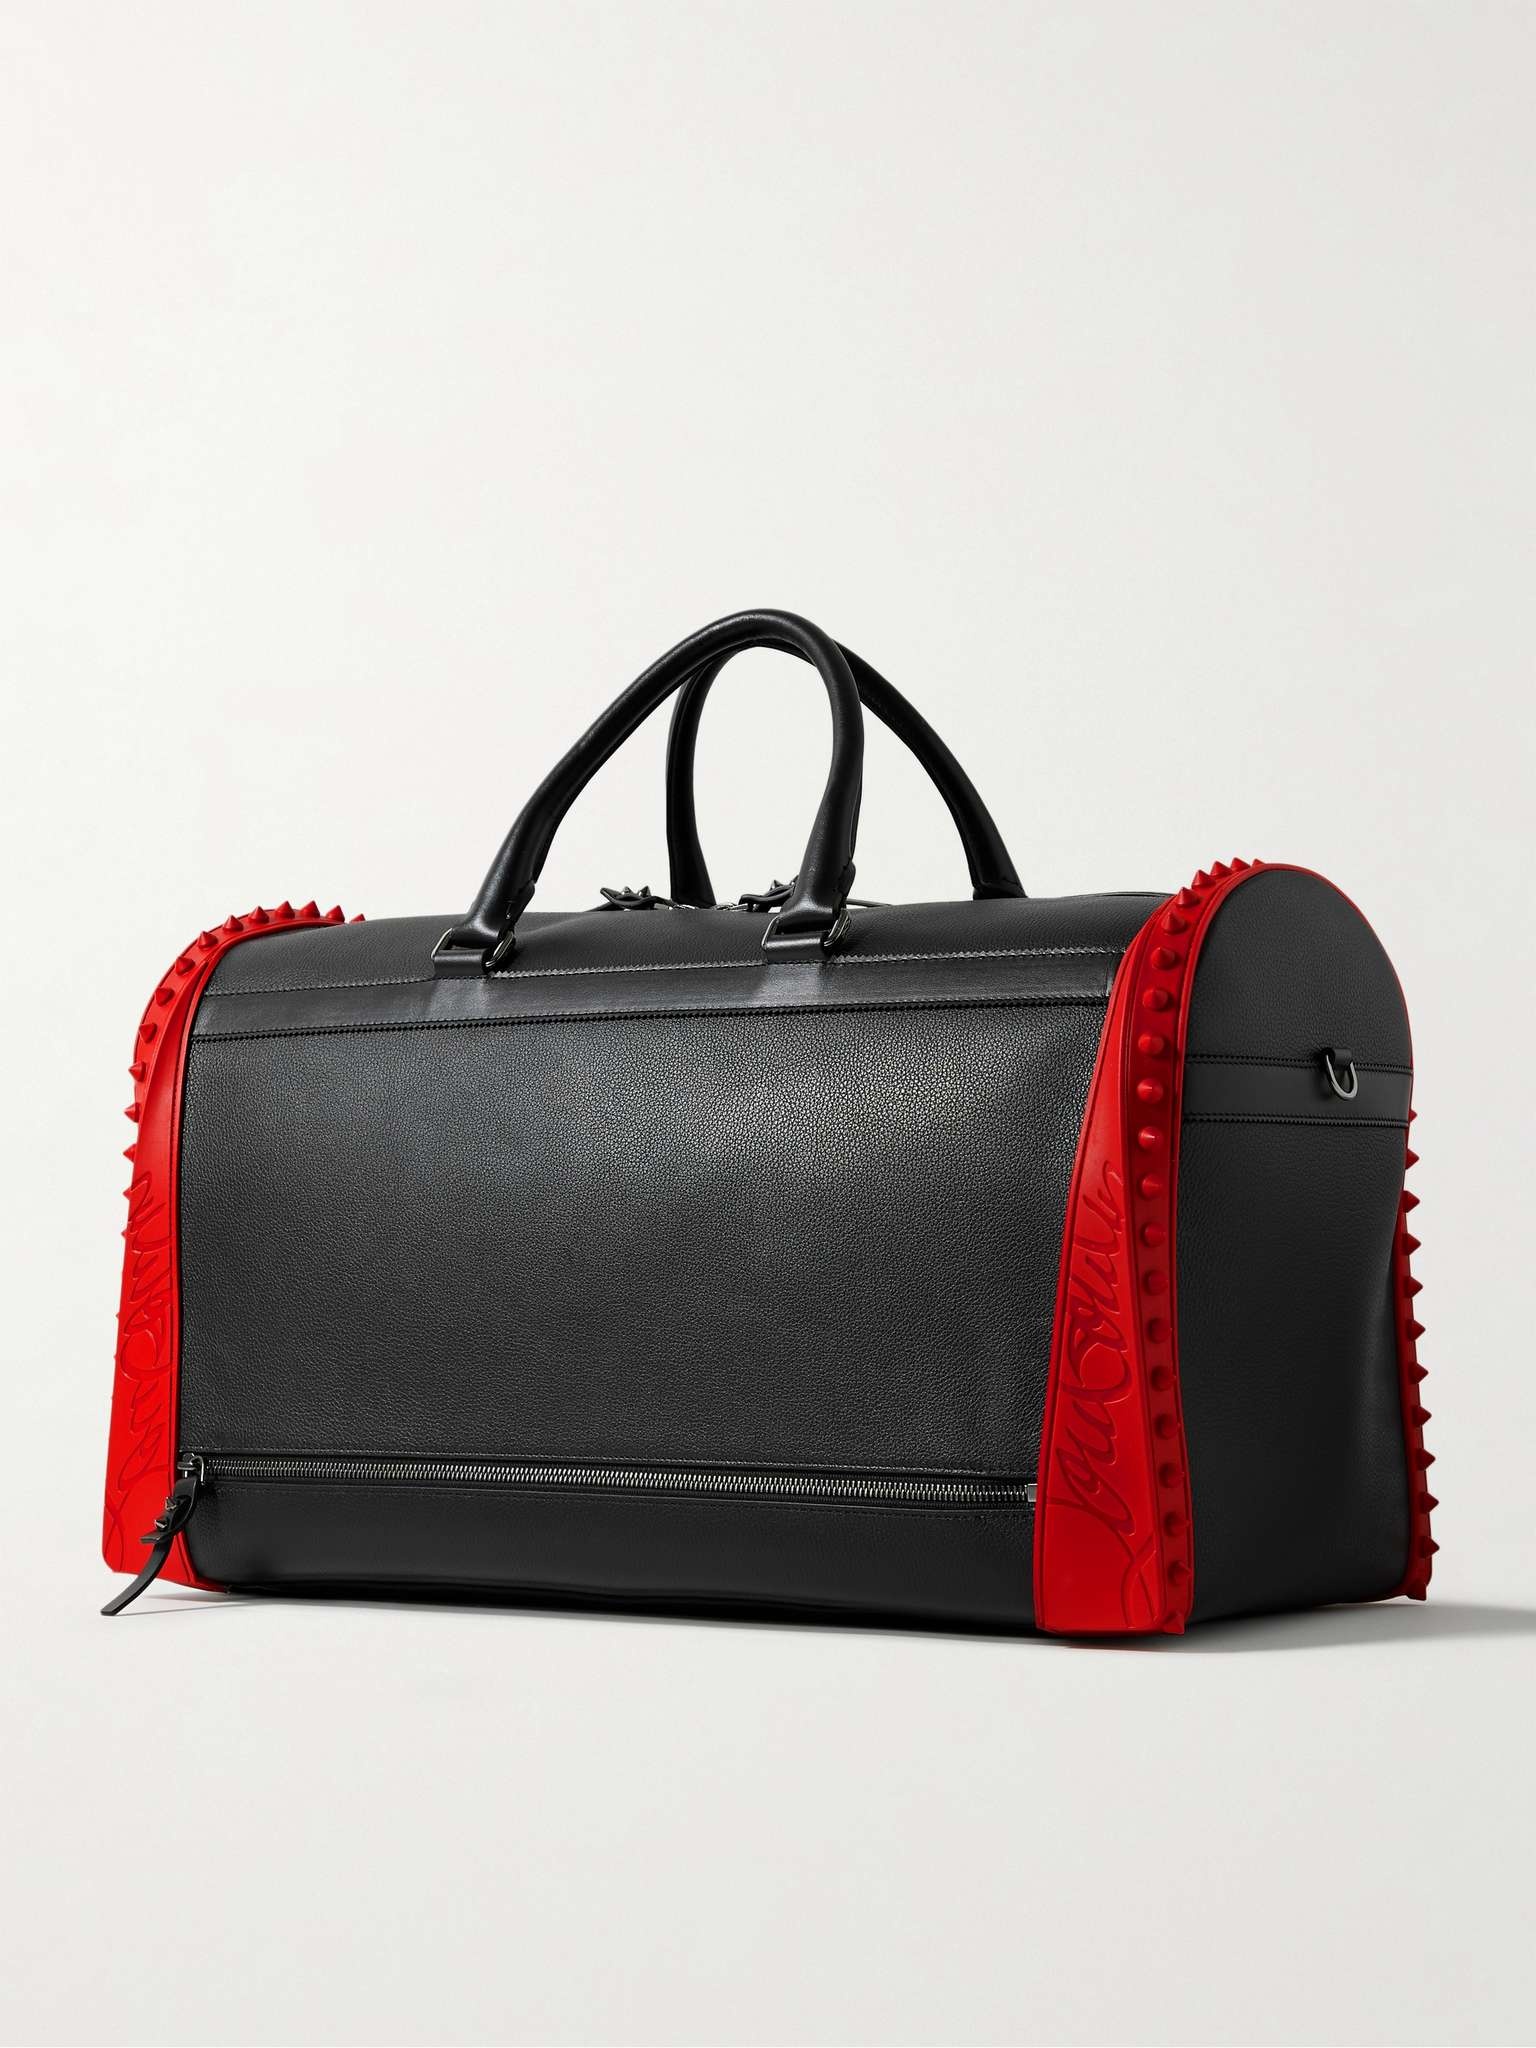 Christian Louboutin Men's Sneakender Leather Spike Duffel Bag